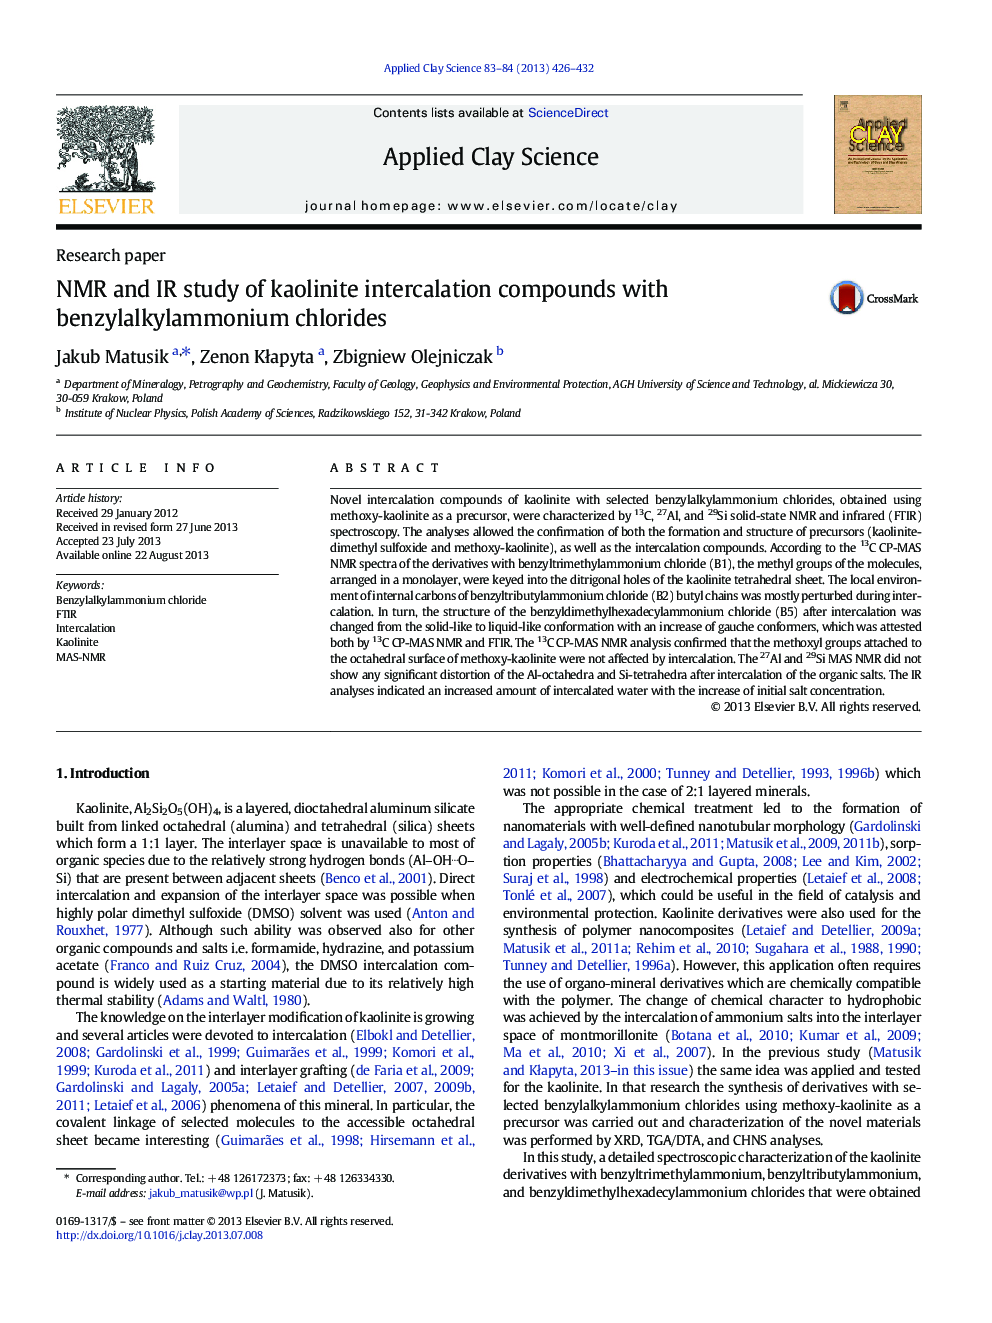 NMR and IR study of kaolinite intercalation compounds with benzylalkylammonium chlorides